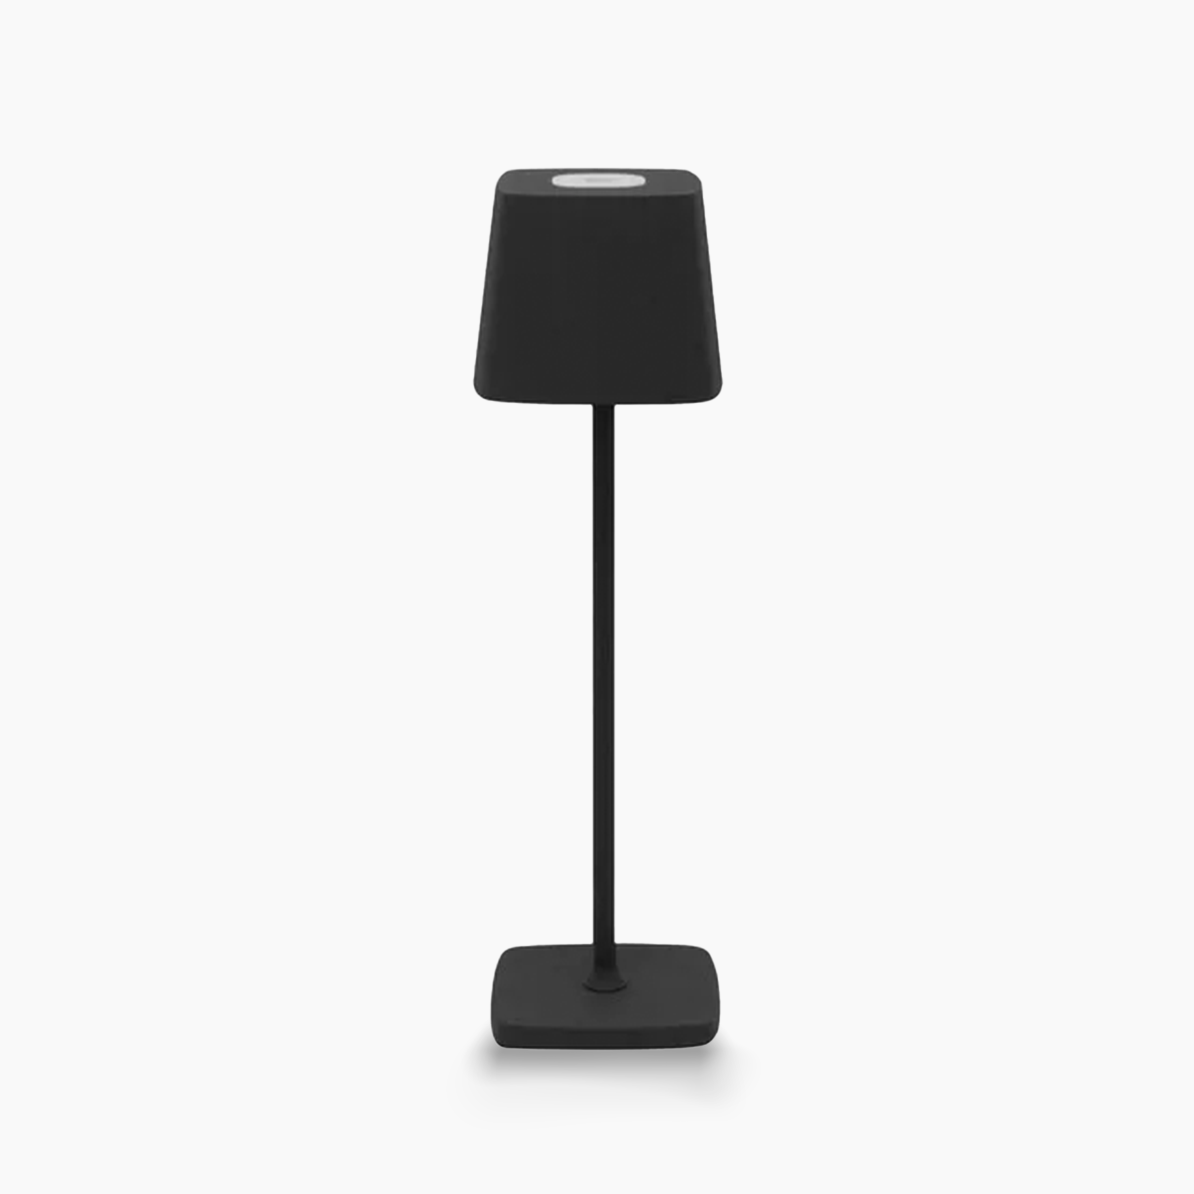 Luxilight | Kabellosen Tischlampe - - Luxilight | Kabellosen Tischlampe - € - Tischlampen Tragbare Lampen - Concept Frankfurt